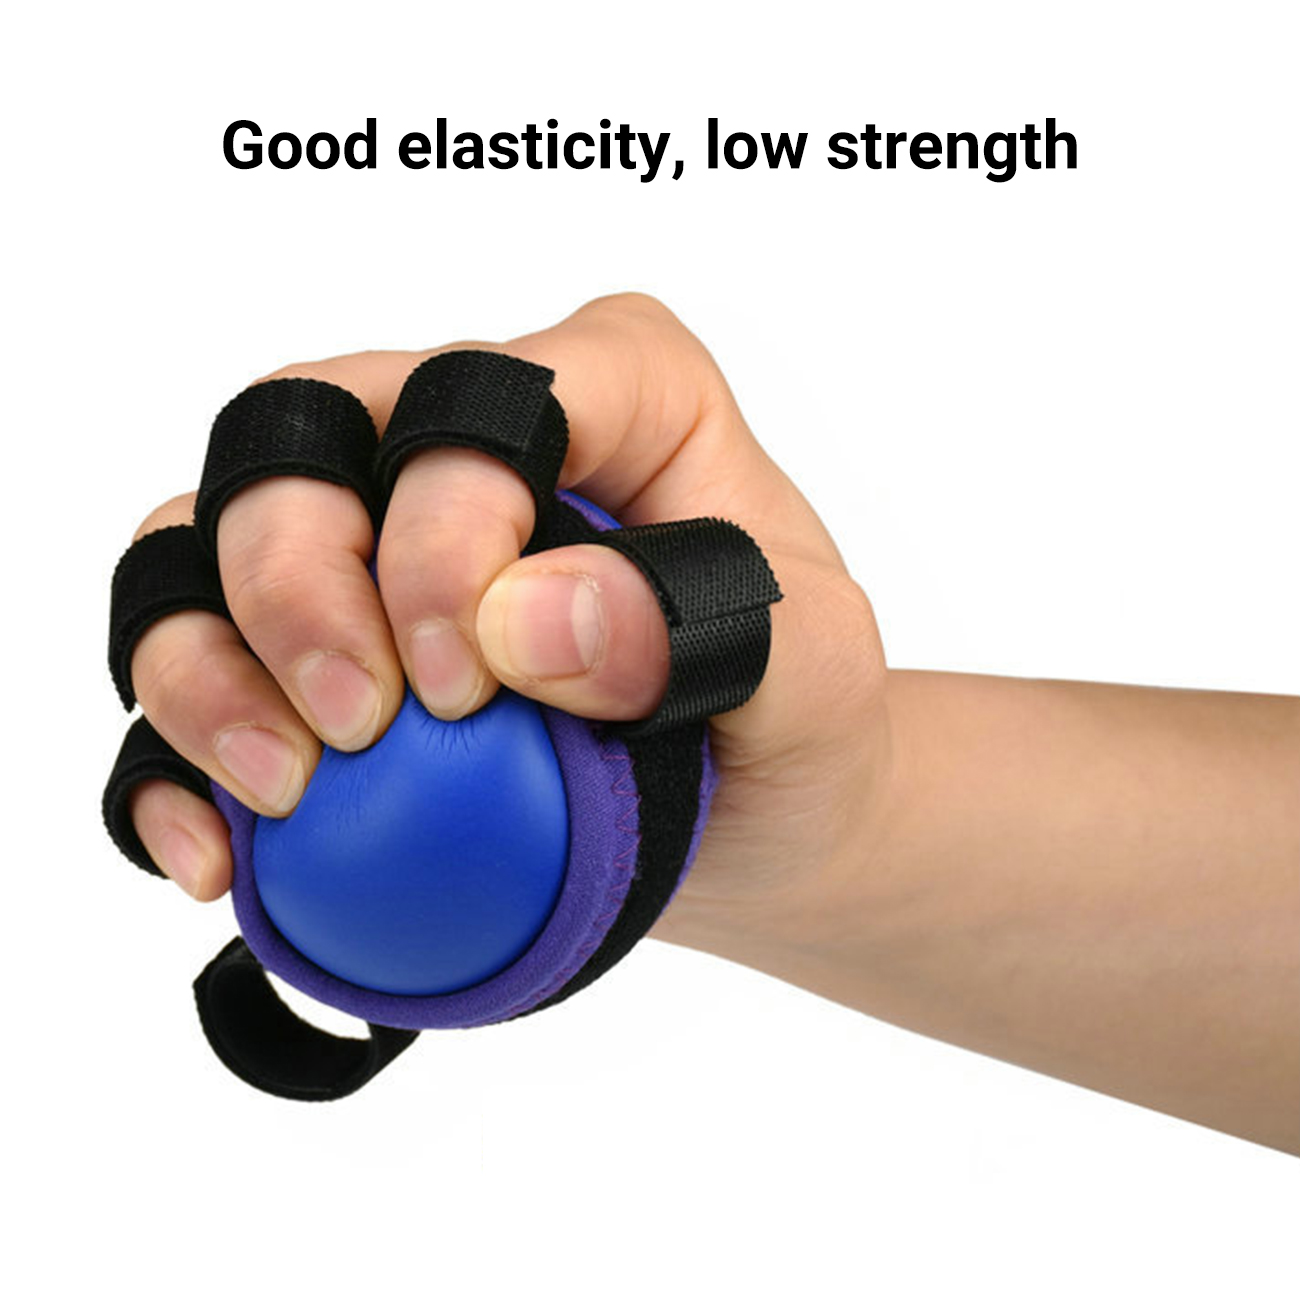 Hand Grip PU Ball Finger Practice Rehabilitation Training Gripper Hemiplegia Exercise Muscle Power Strengthen Tools